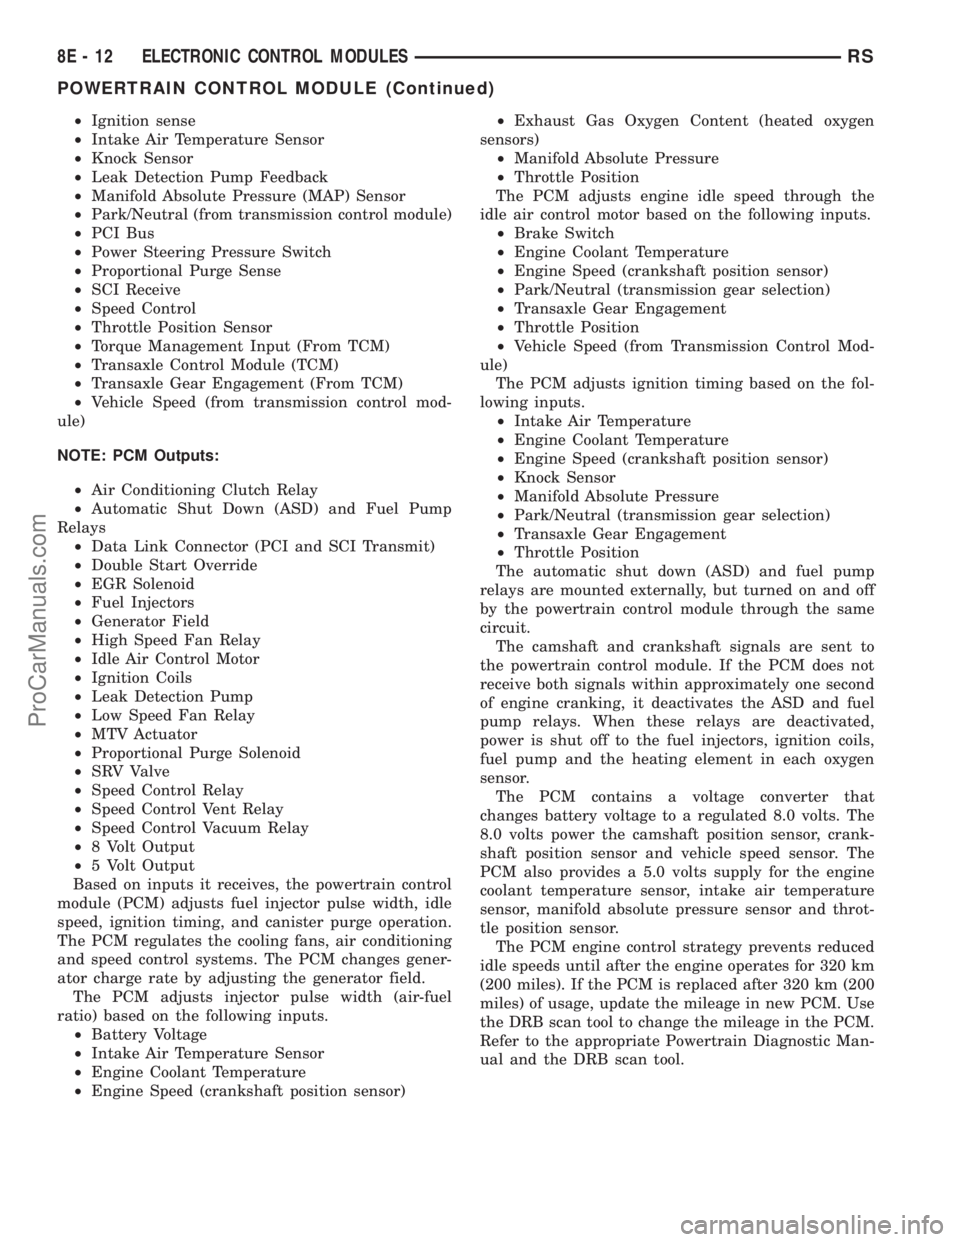 CHRYSLER VOYAGER 2002  Service Manual ²Ignition sense
²Intake Air Temperature Sensor
²Knock Sensor
²Leak Detection Pump Feedback
²Manifold Absolute Pressure (MAP) Sensor
²Park/Neutral (from transmission control module)
²PCI Bus
²P